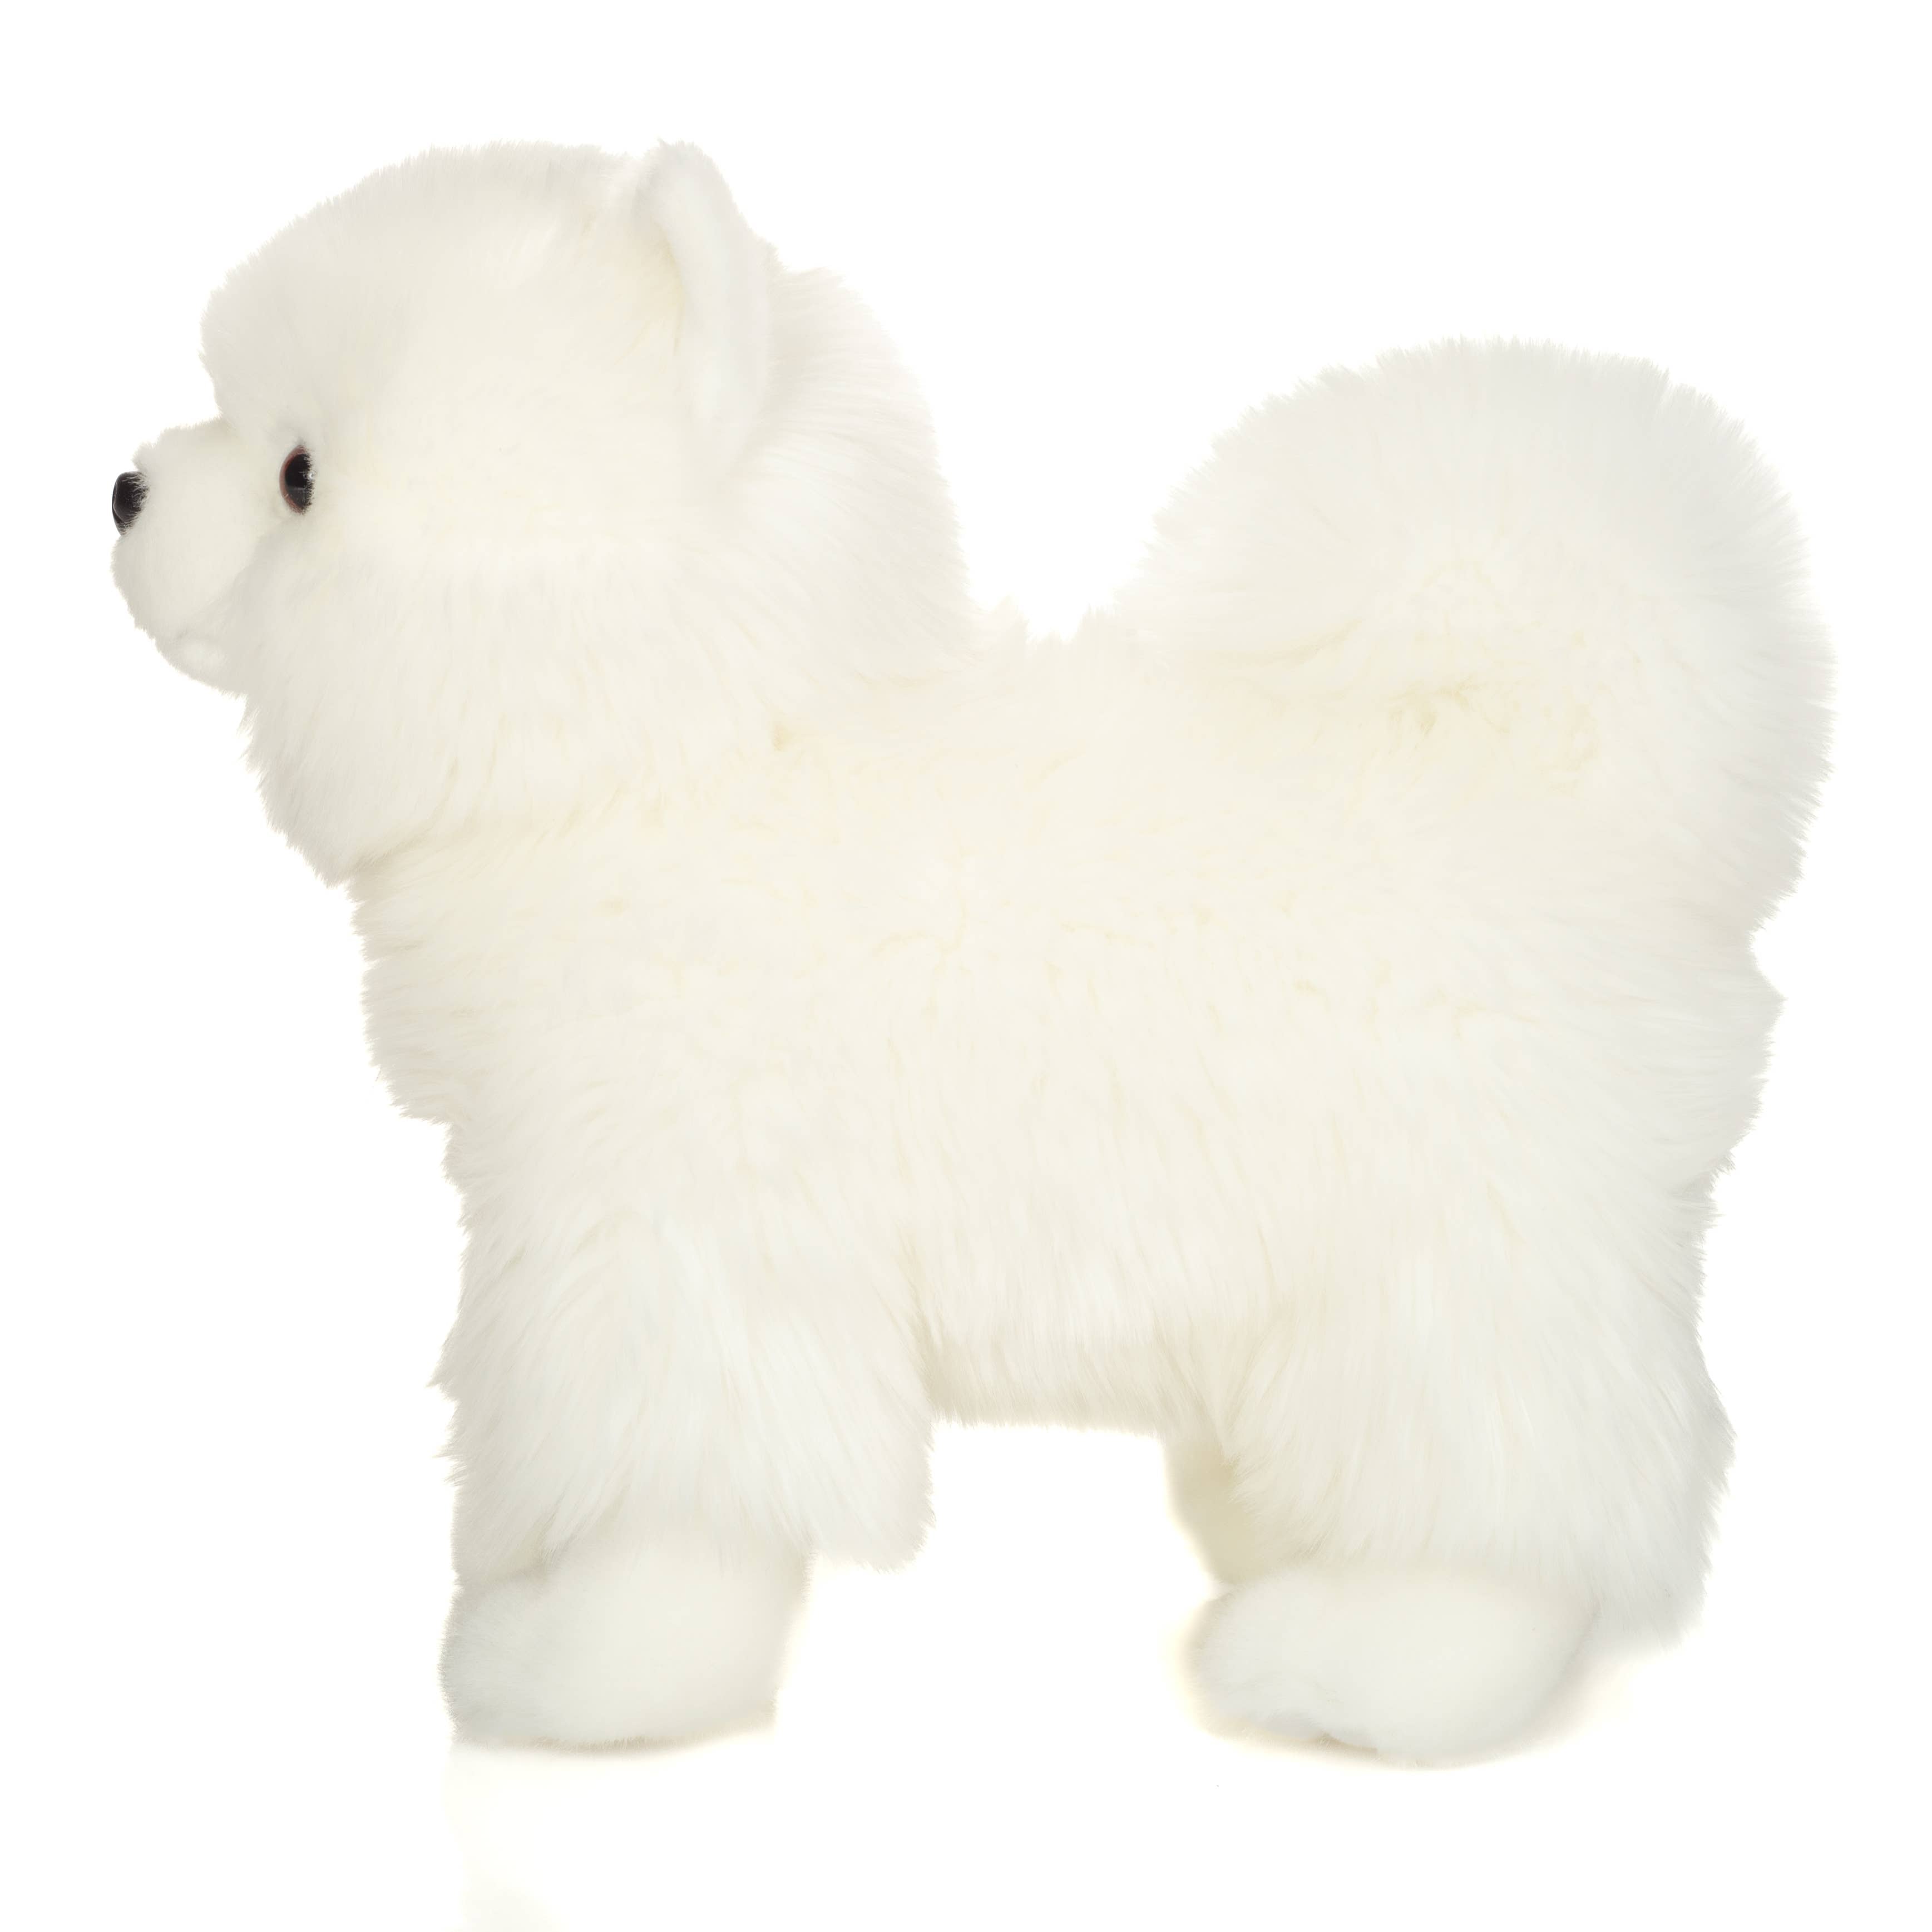 Teddy Hermann - Spitz white standing 35 cm - plush toy - stuffed toy